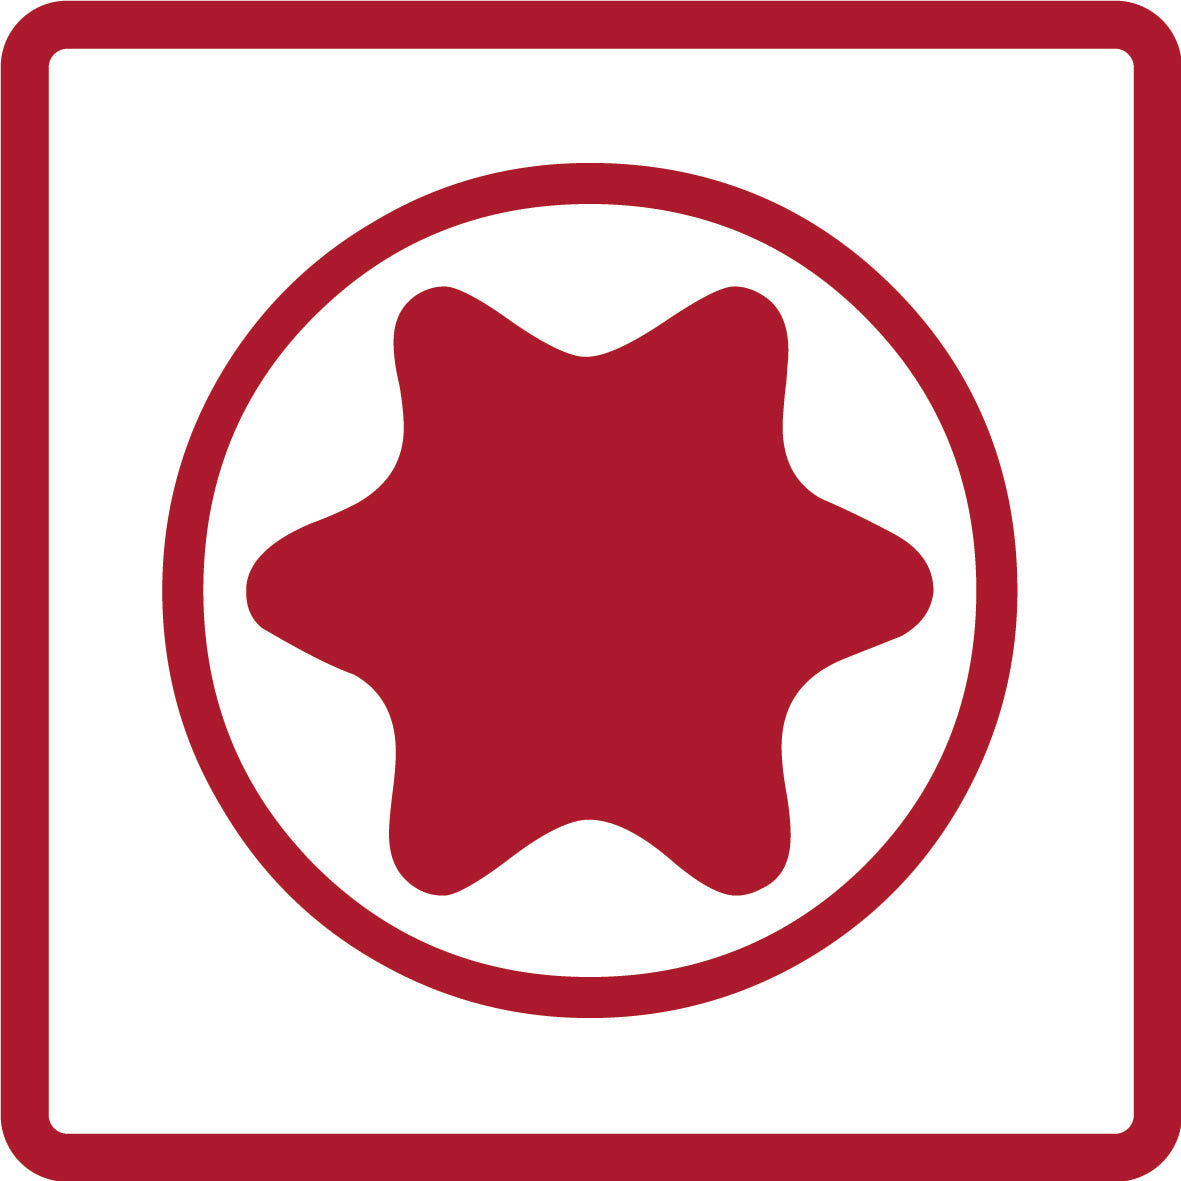 GEDORE red R33005031 - Juego de puntas 1/4" Planas + PH + PZ + TORX® + hexagonal, 32 piezas (3301338)